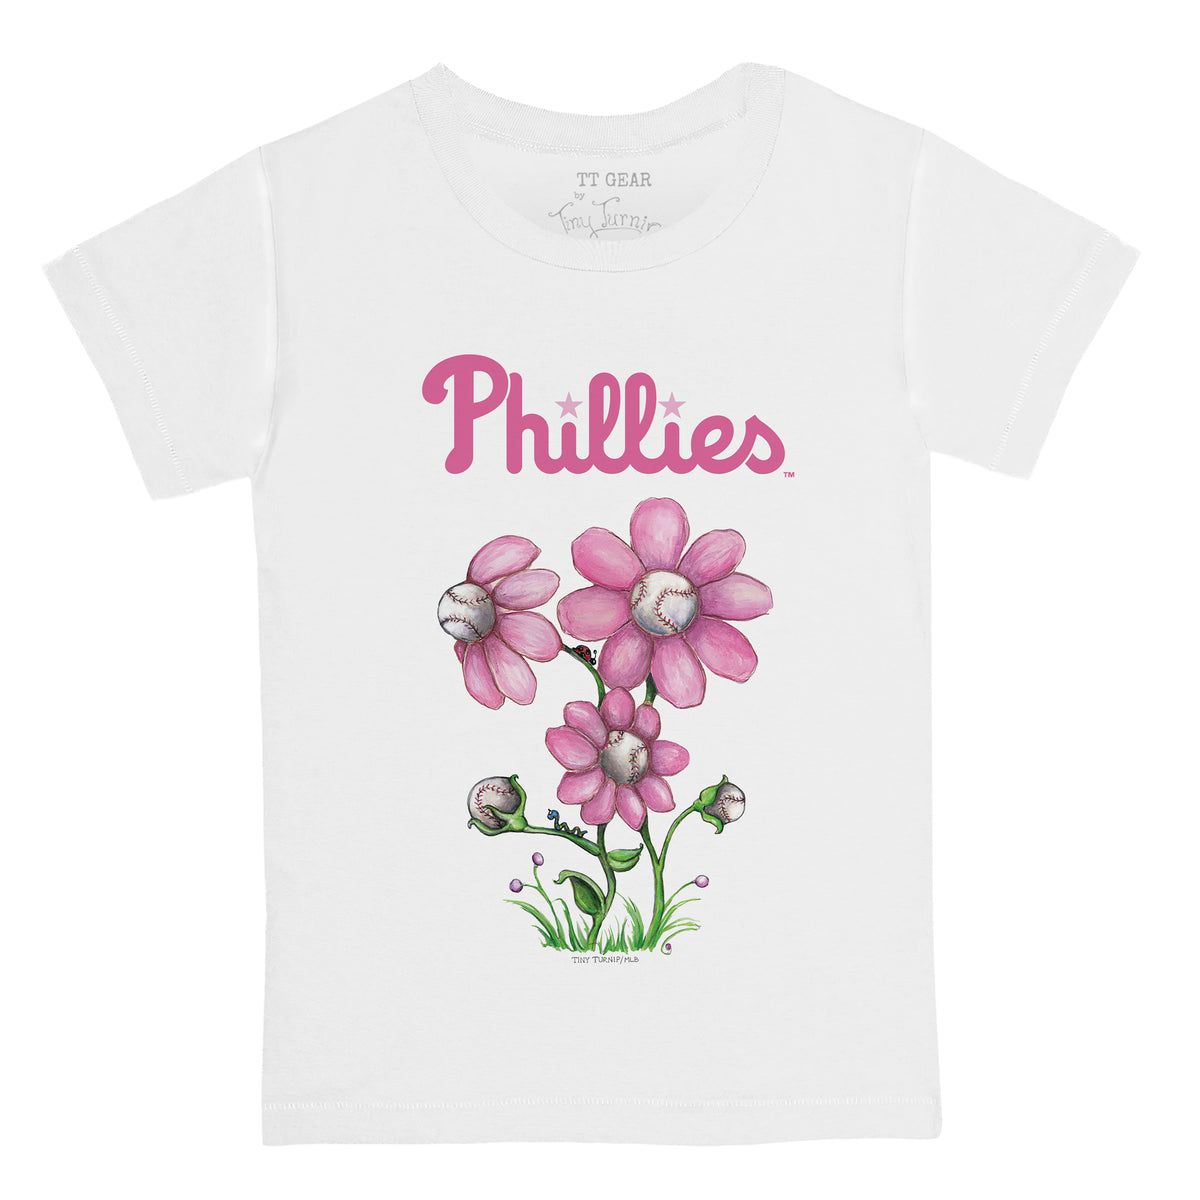 Philadelphia Phillies Blooming Baseballs Tee Shirt